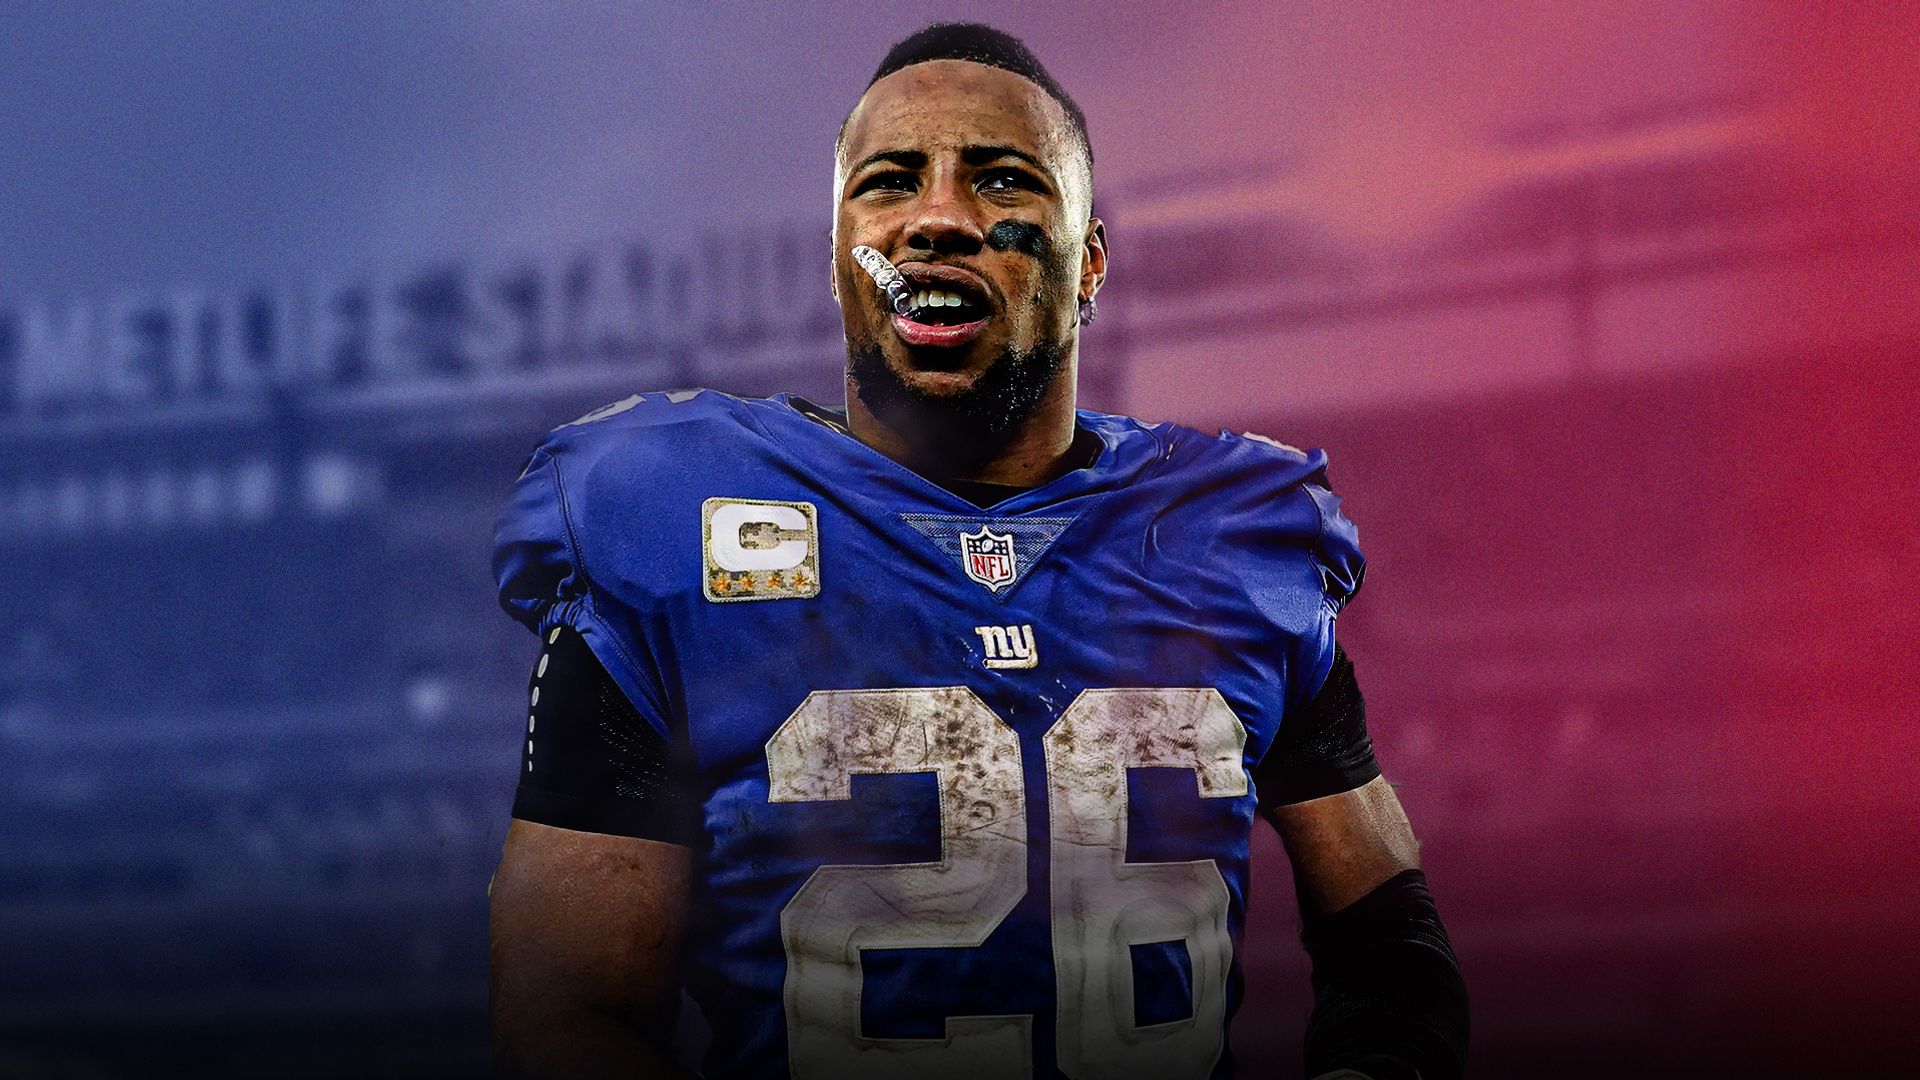 Will the Giants pay Saquon Barkley? The NFL’s operating again debateSkySports | Information